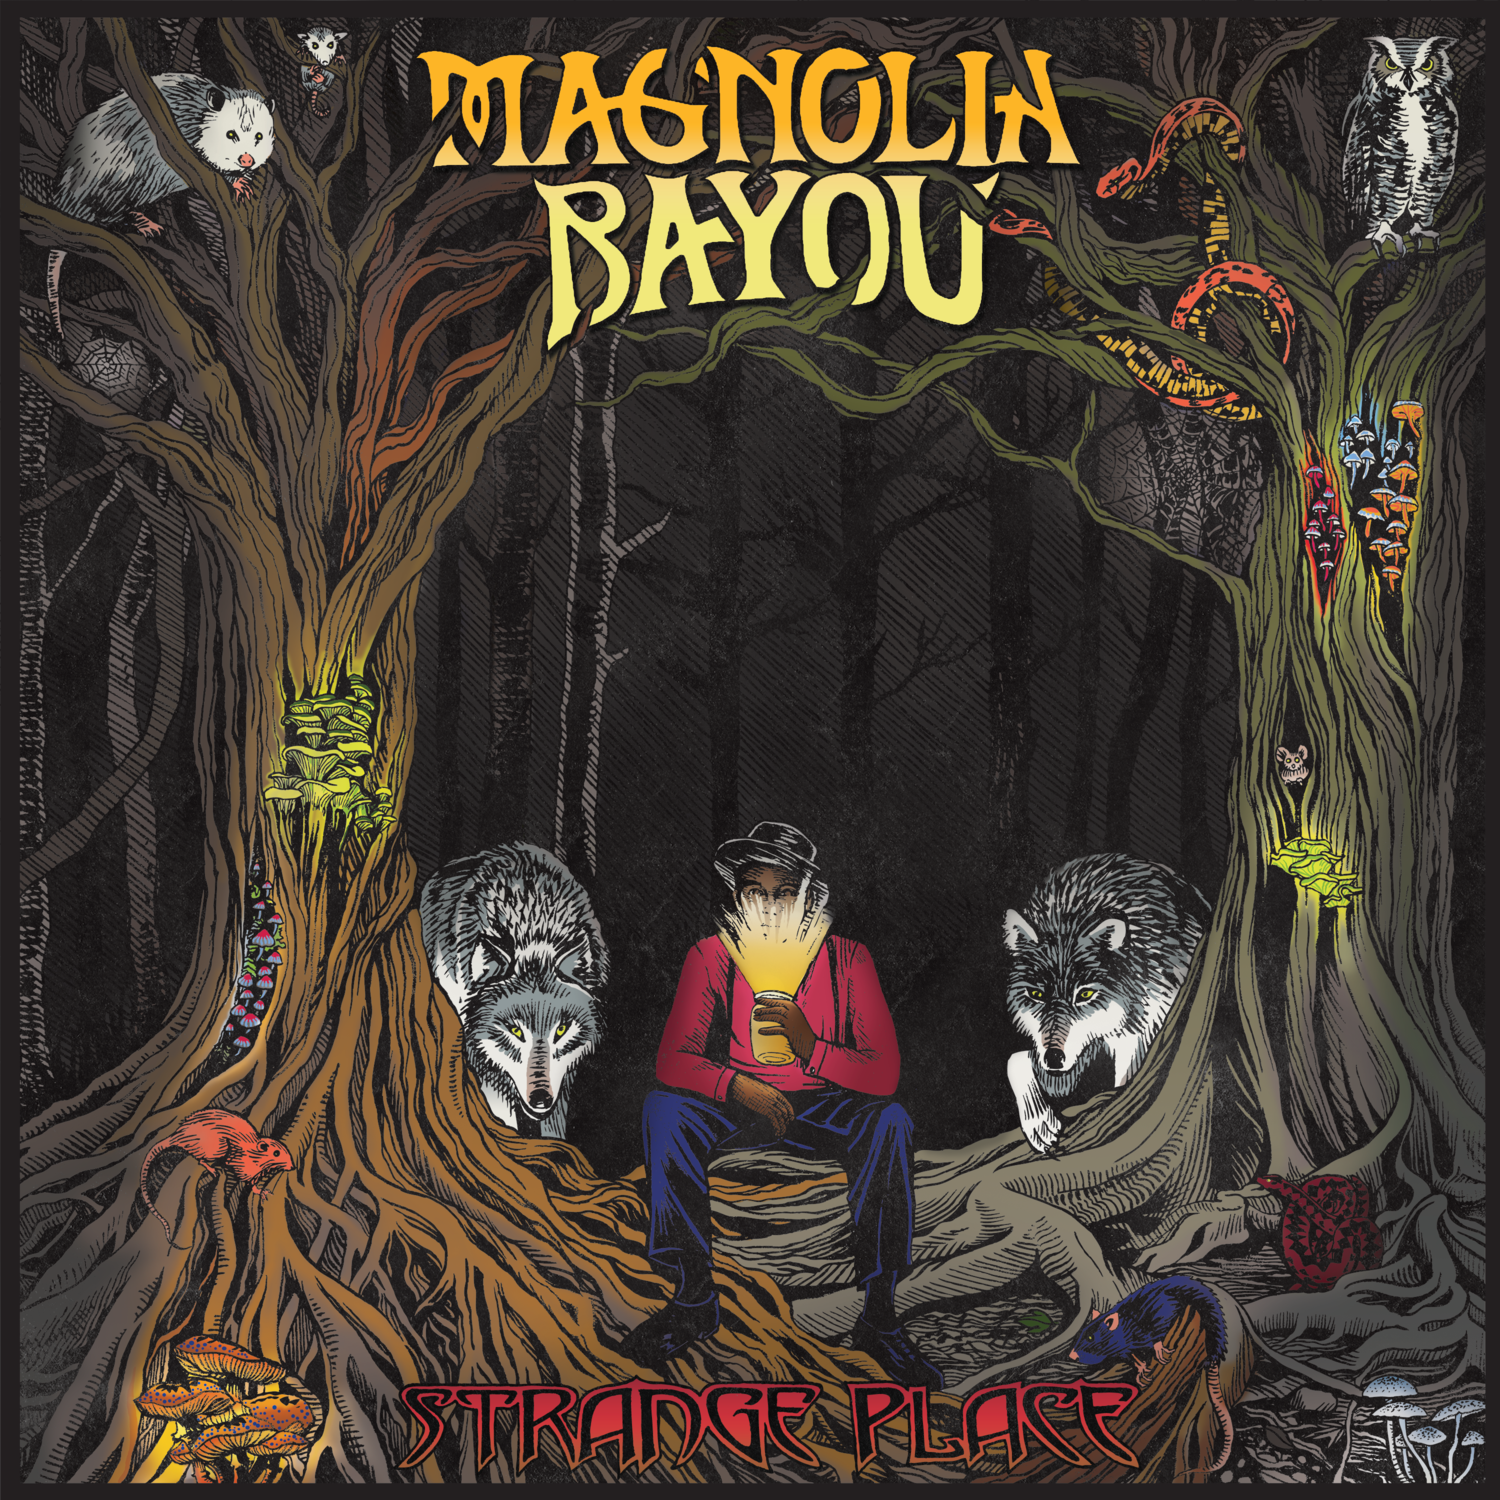 ¿Qué Estás Escuchando? - Página 7 Magnolia-bayou-strange-place-album-cover